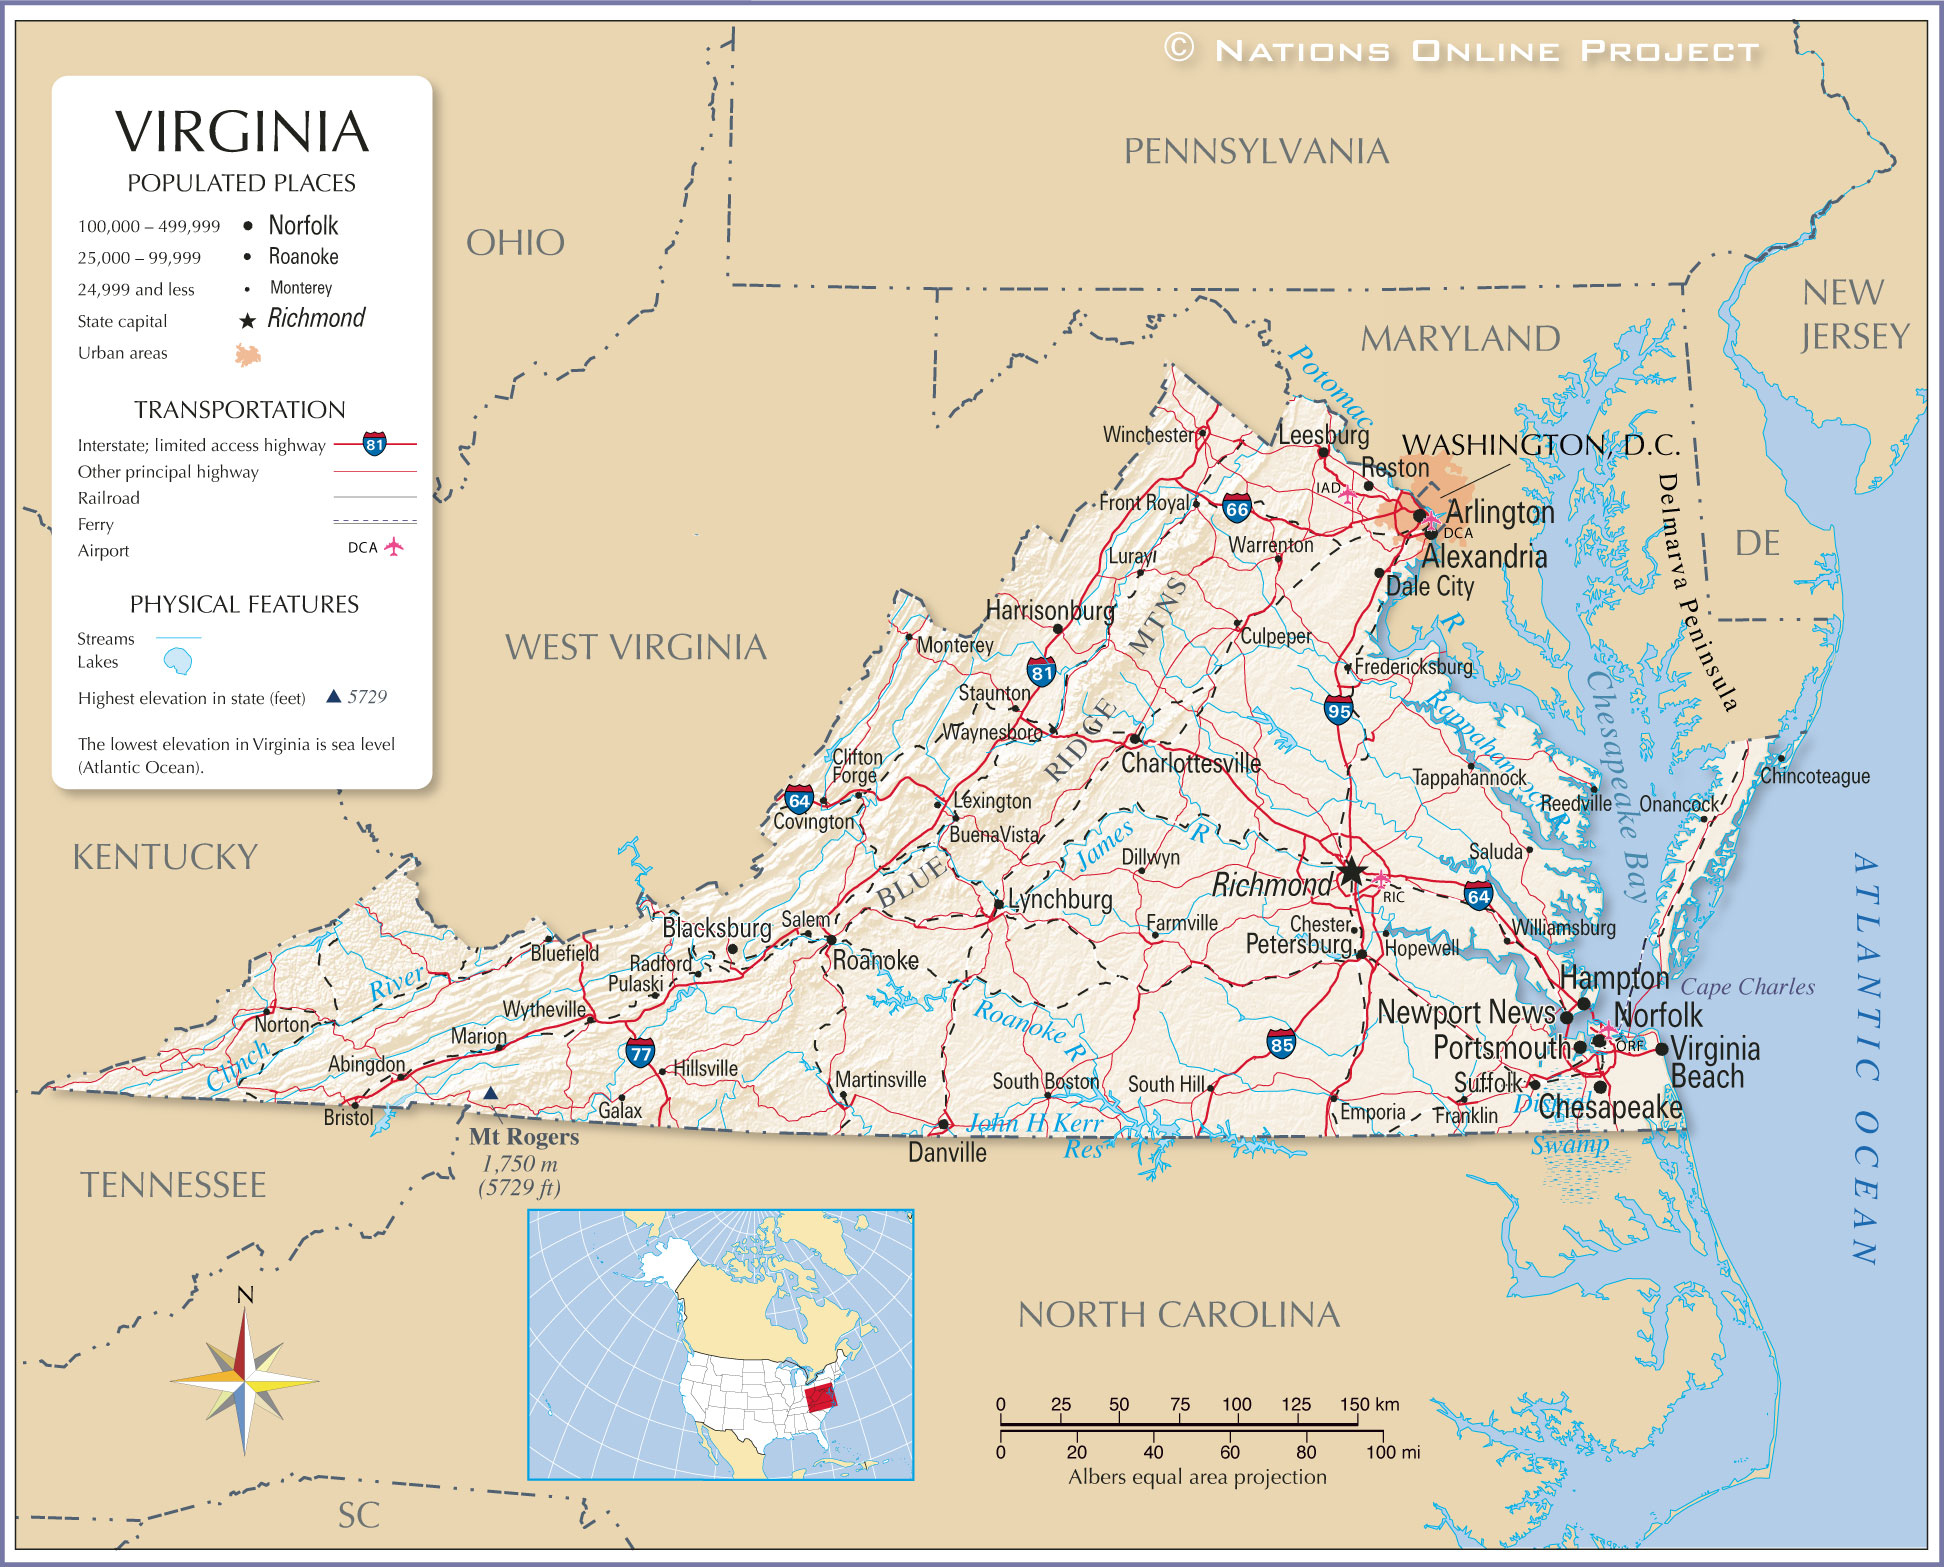 Virginia Cities Map